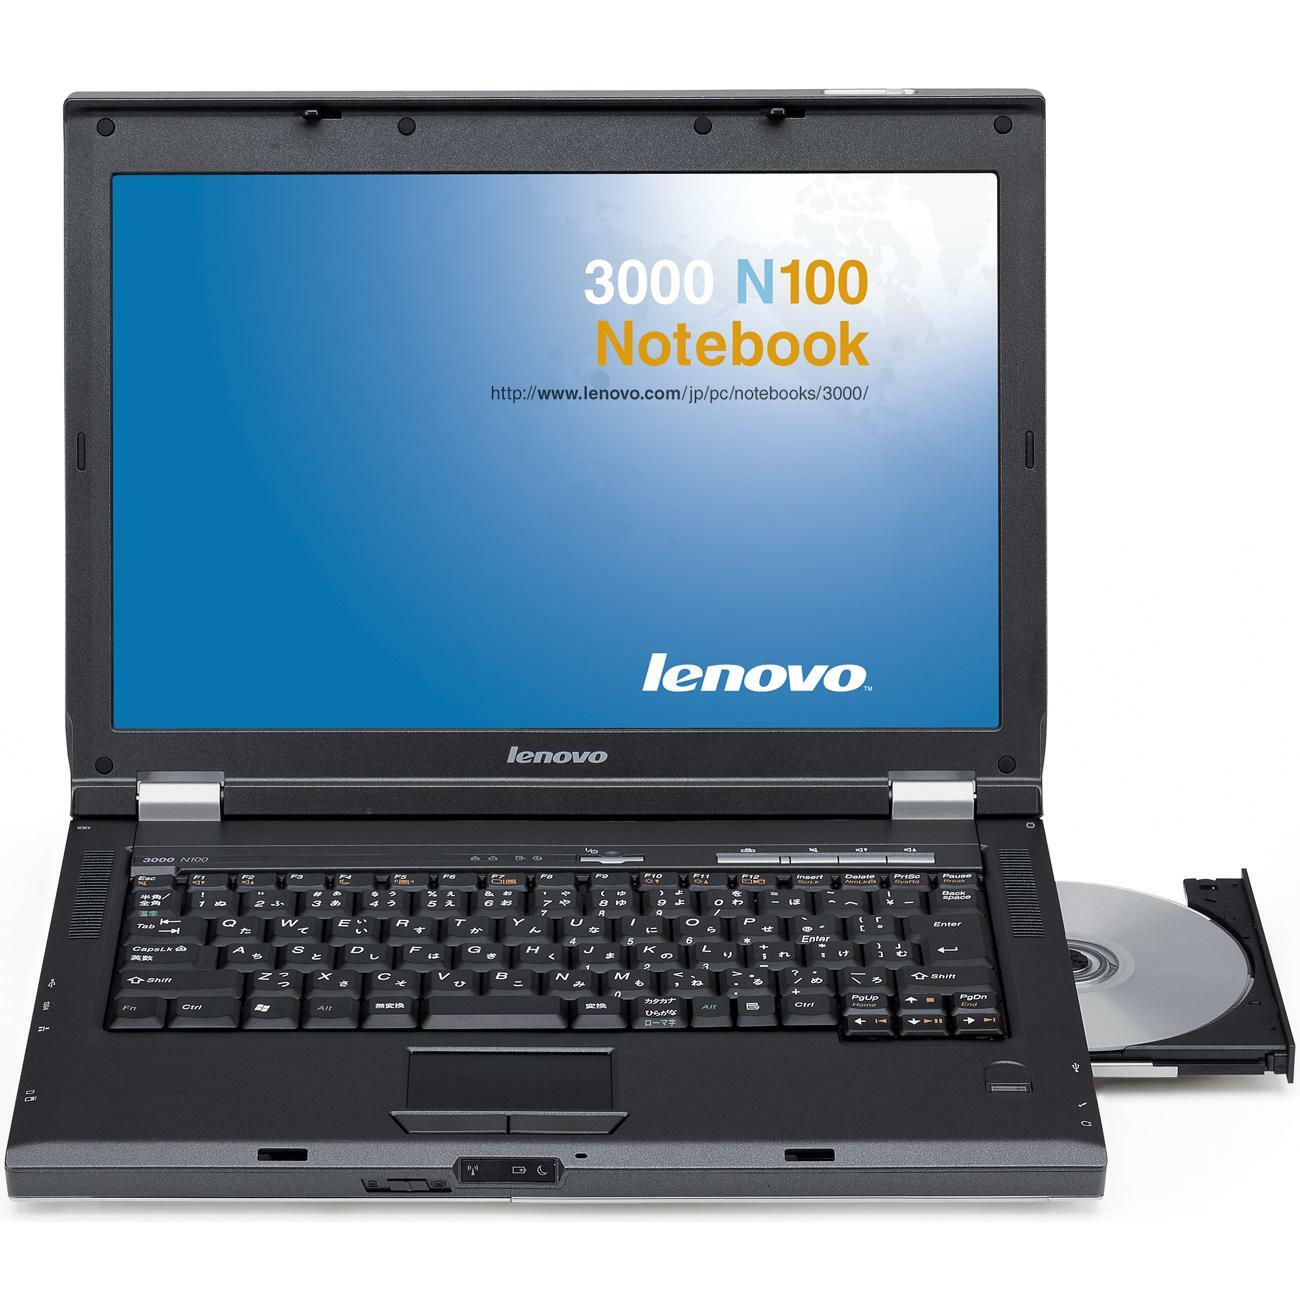 lenovo 3000 n100 usb20 camera drivers for windows 7